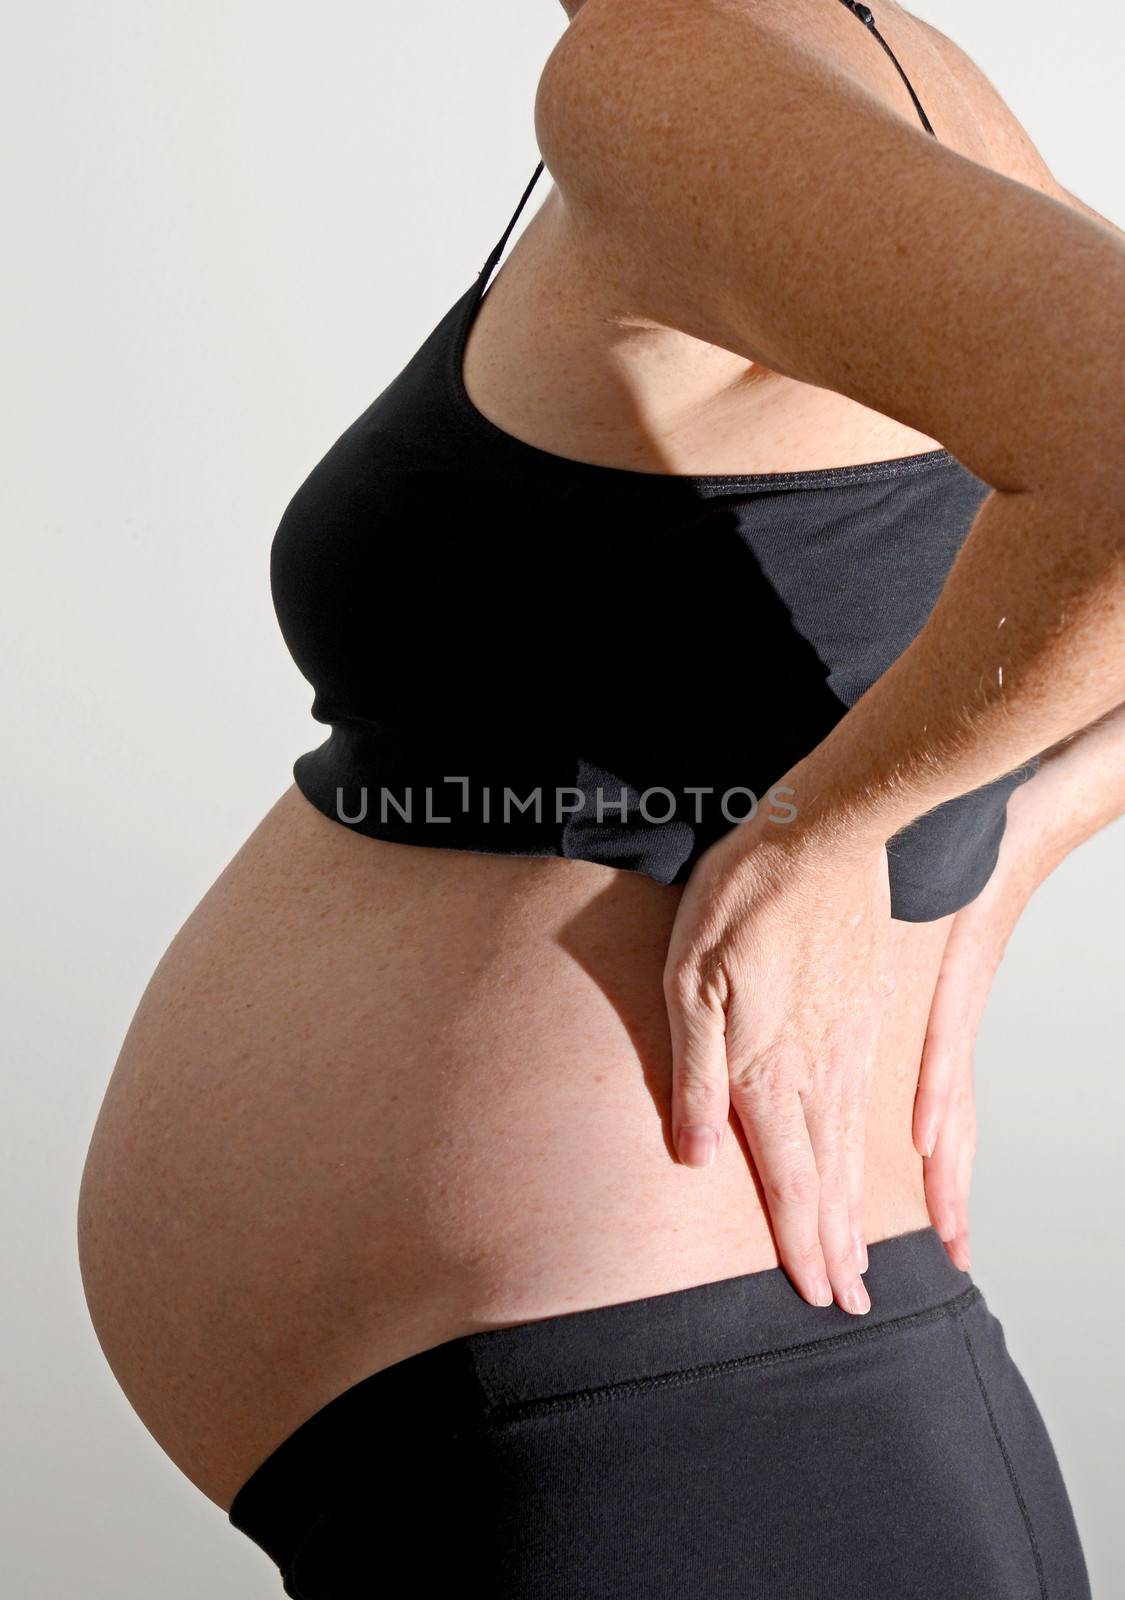 pregnancy back pain by ftlaudgirl